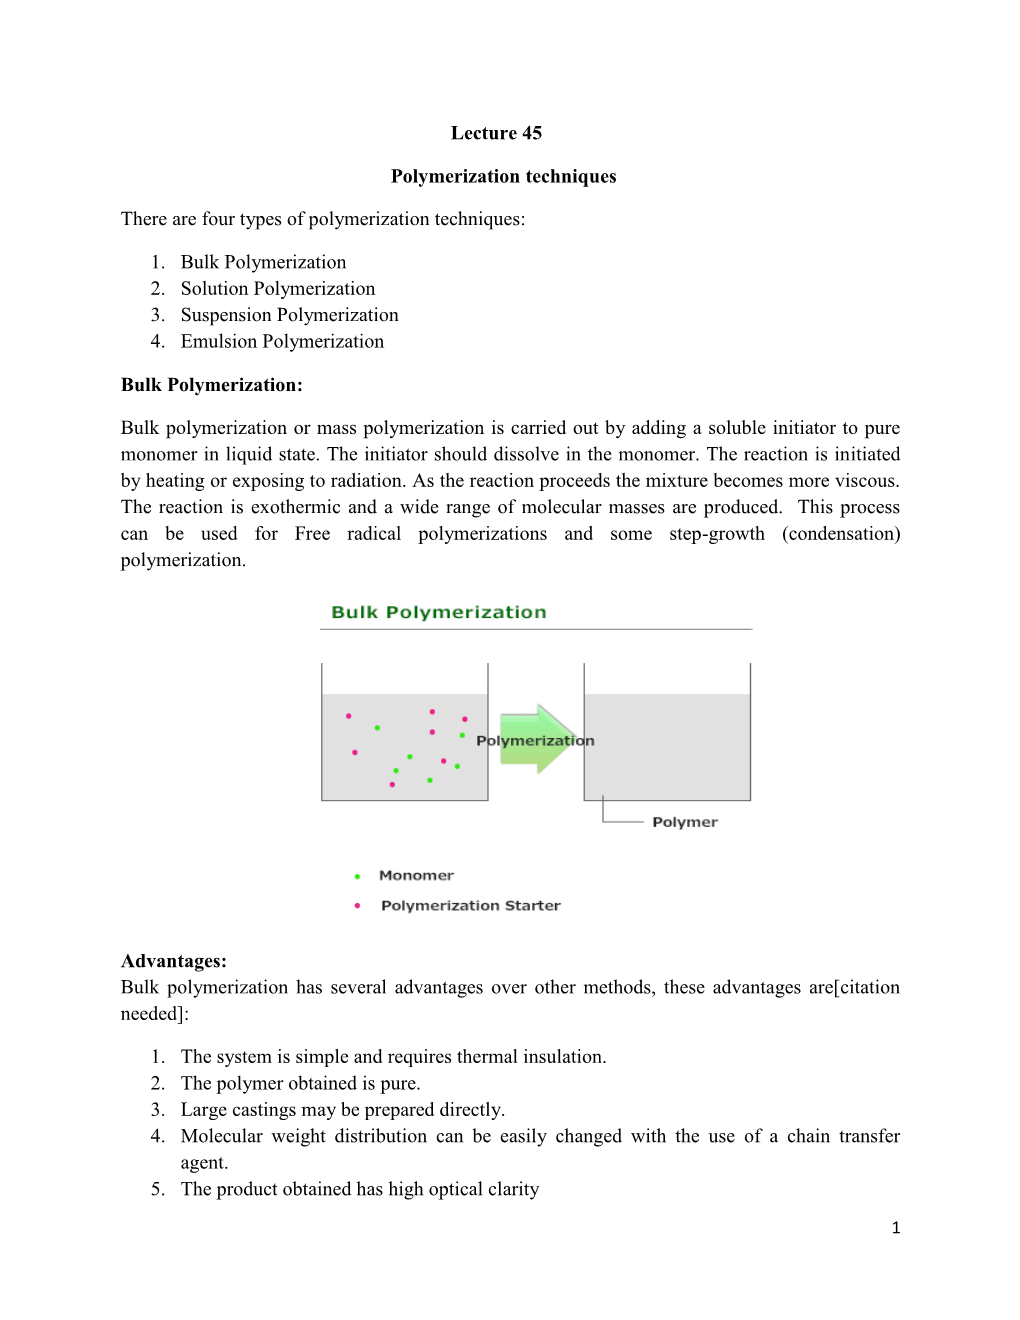 1. Bulk Polymerization 2. Solution Polymerization 3